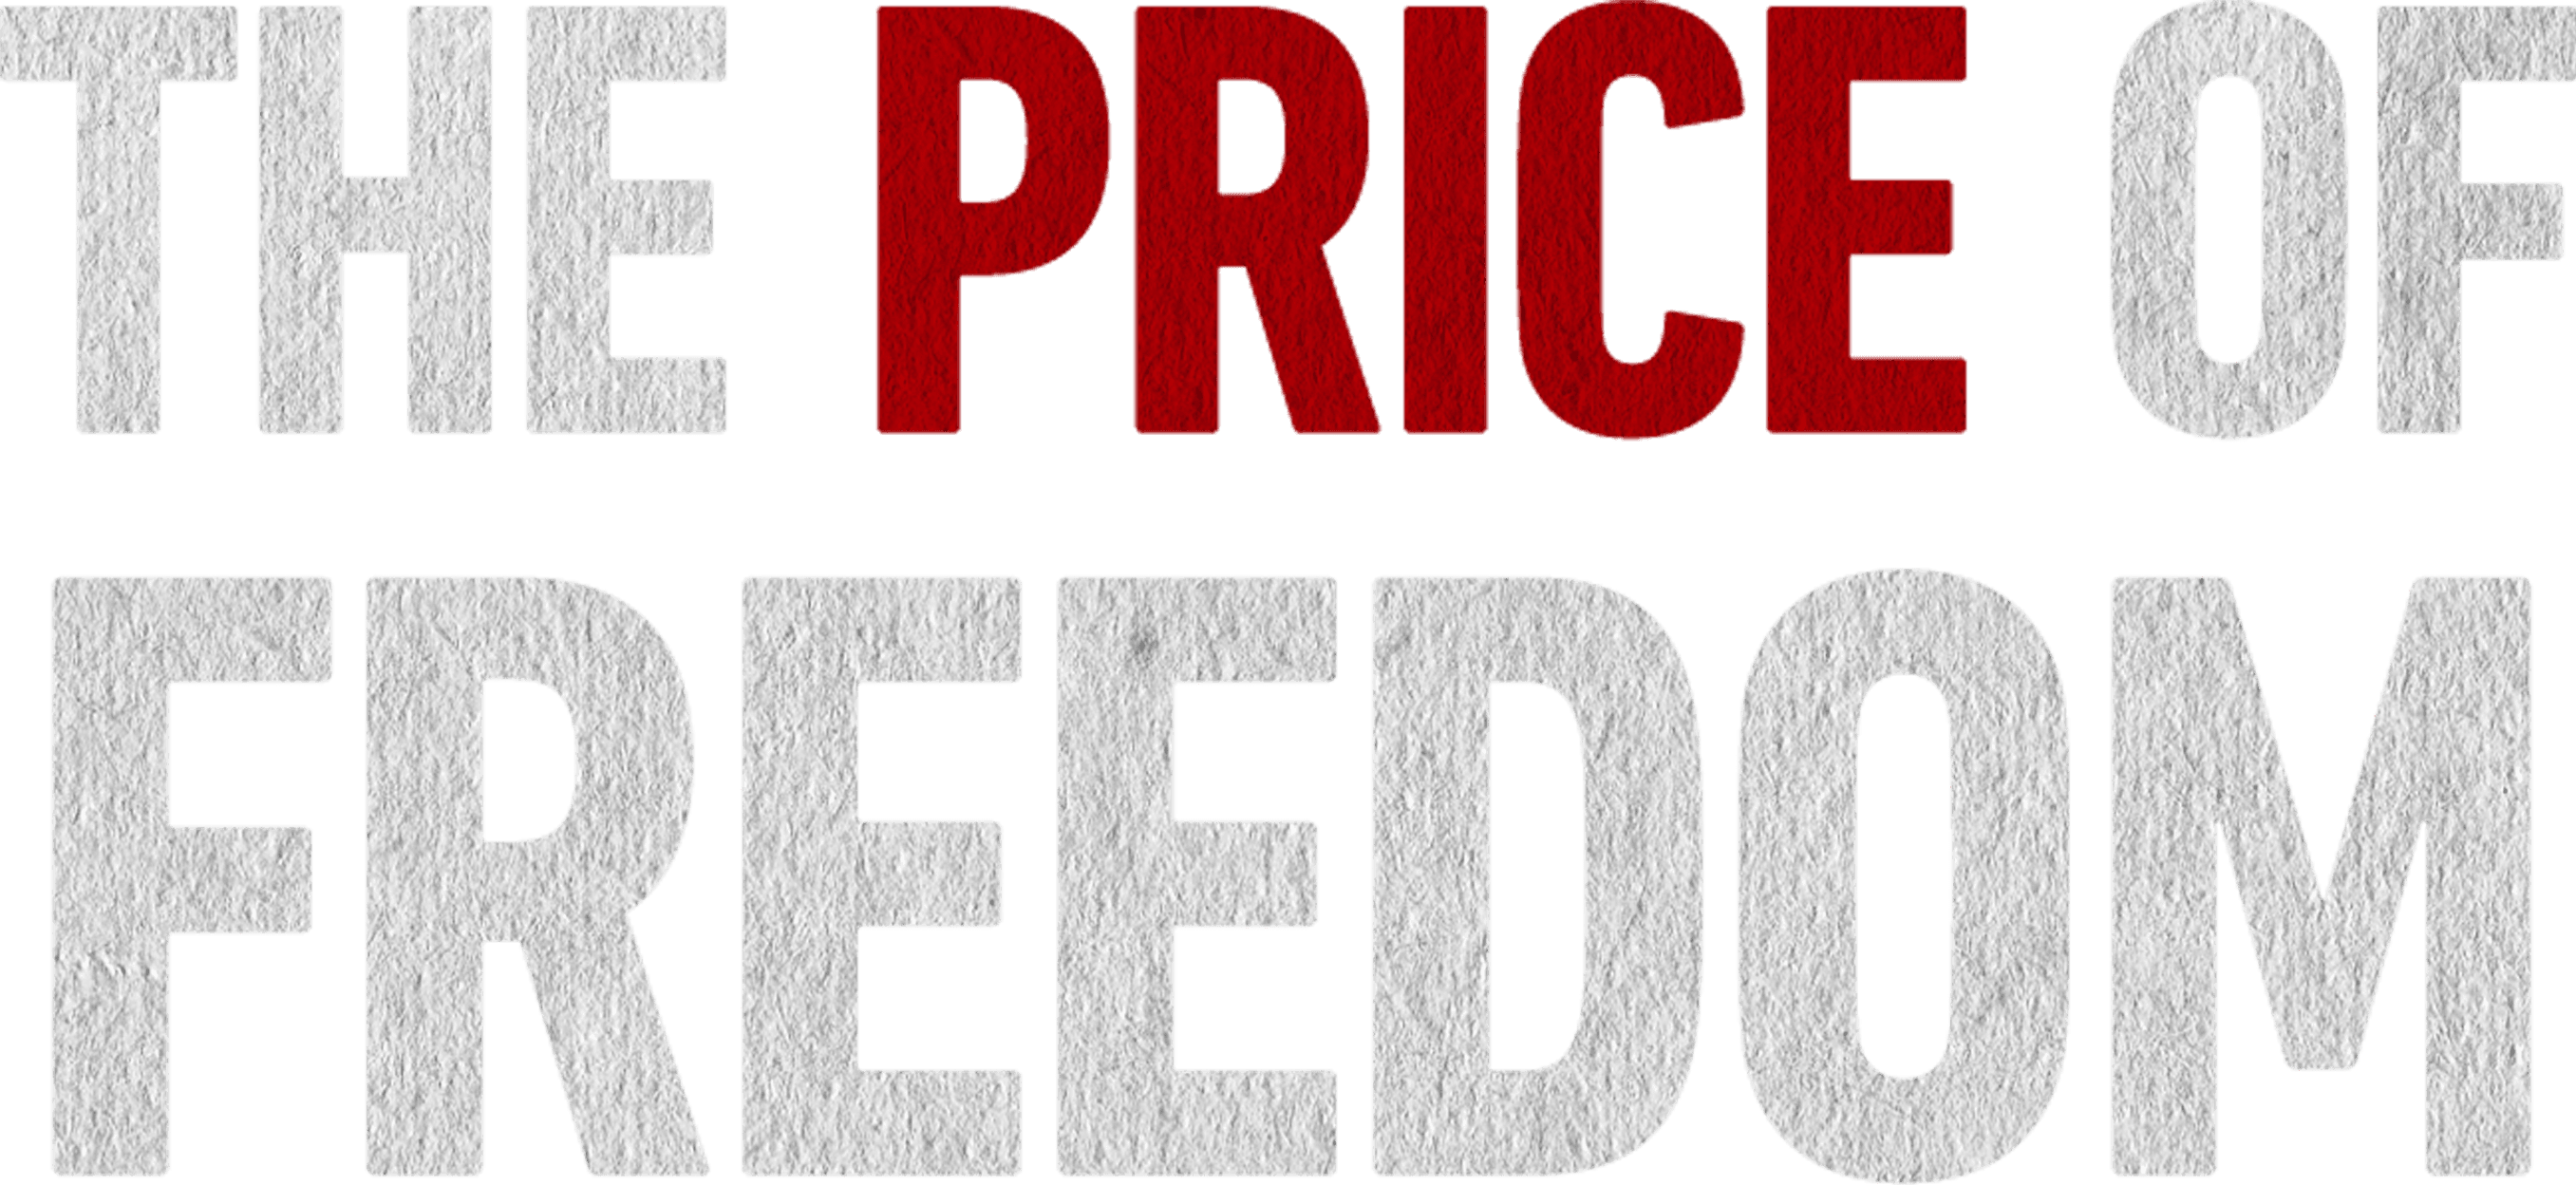 The Price of Freedom logo